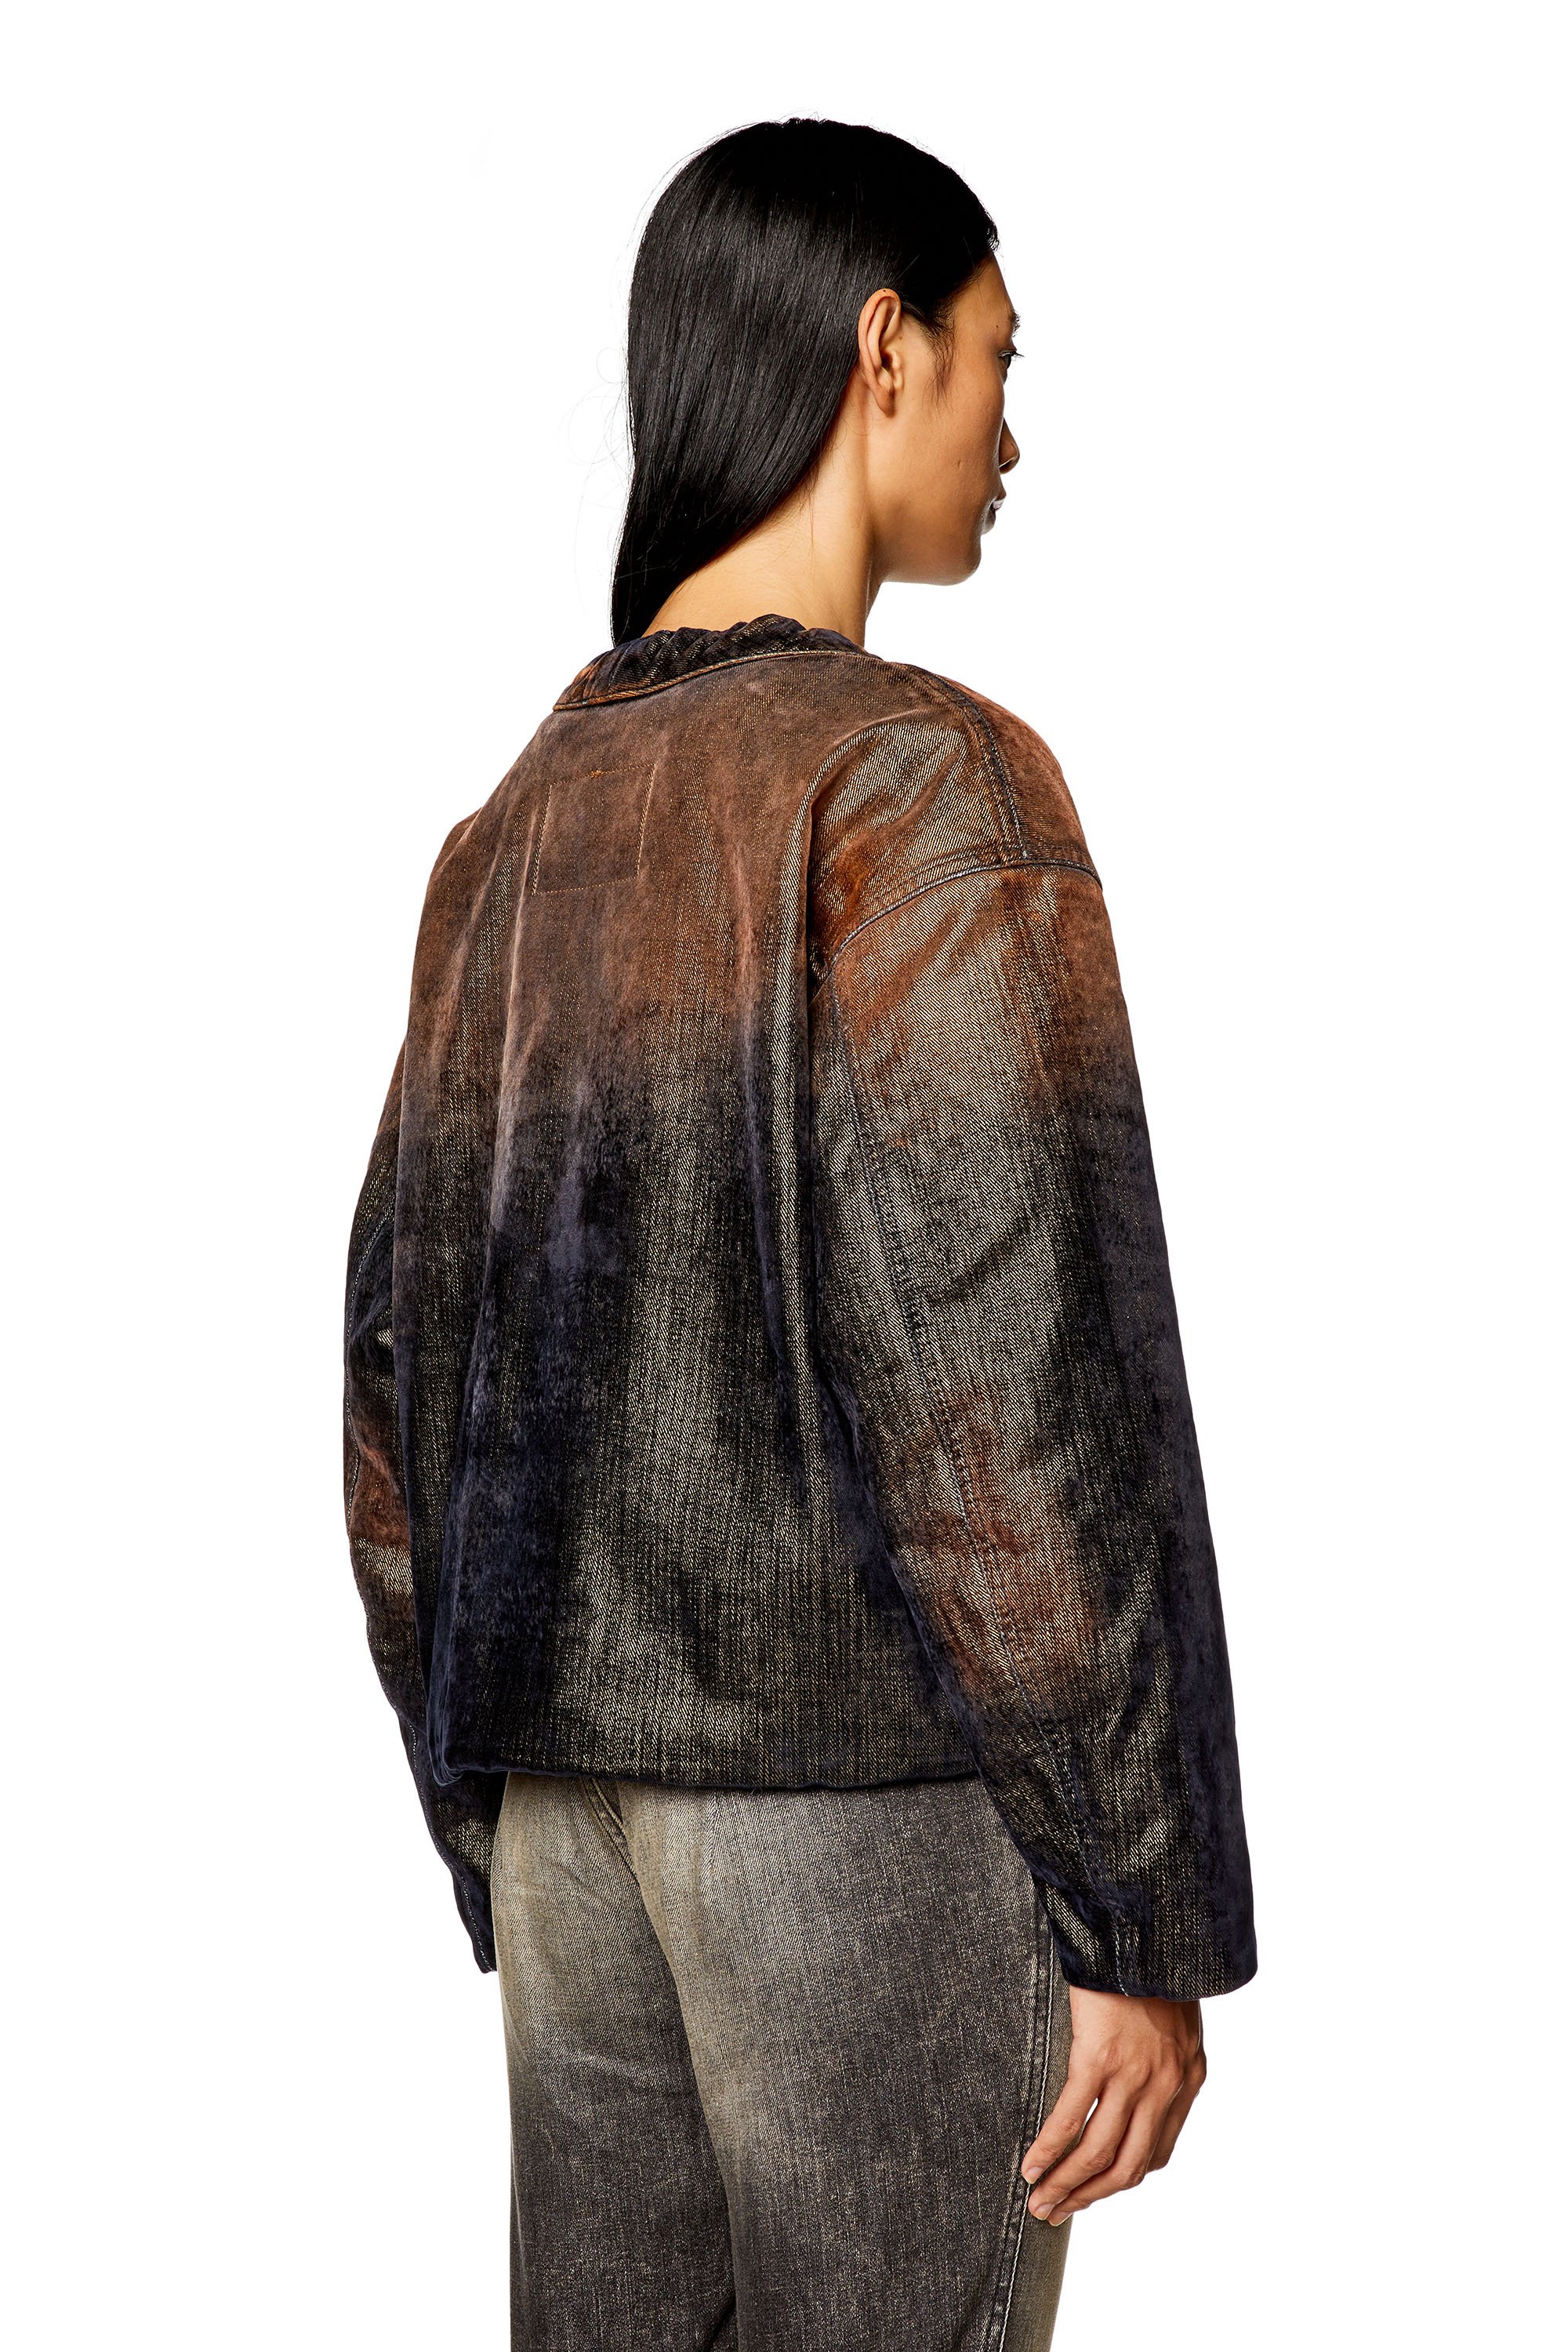 Diesel - DE-CONF-S, Female Jacket in shimmery denim in Multicolor - Image 4